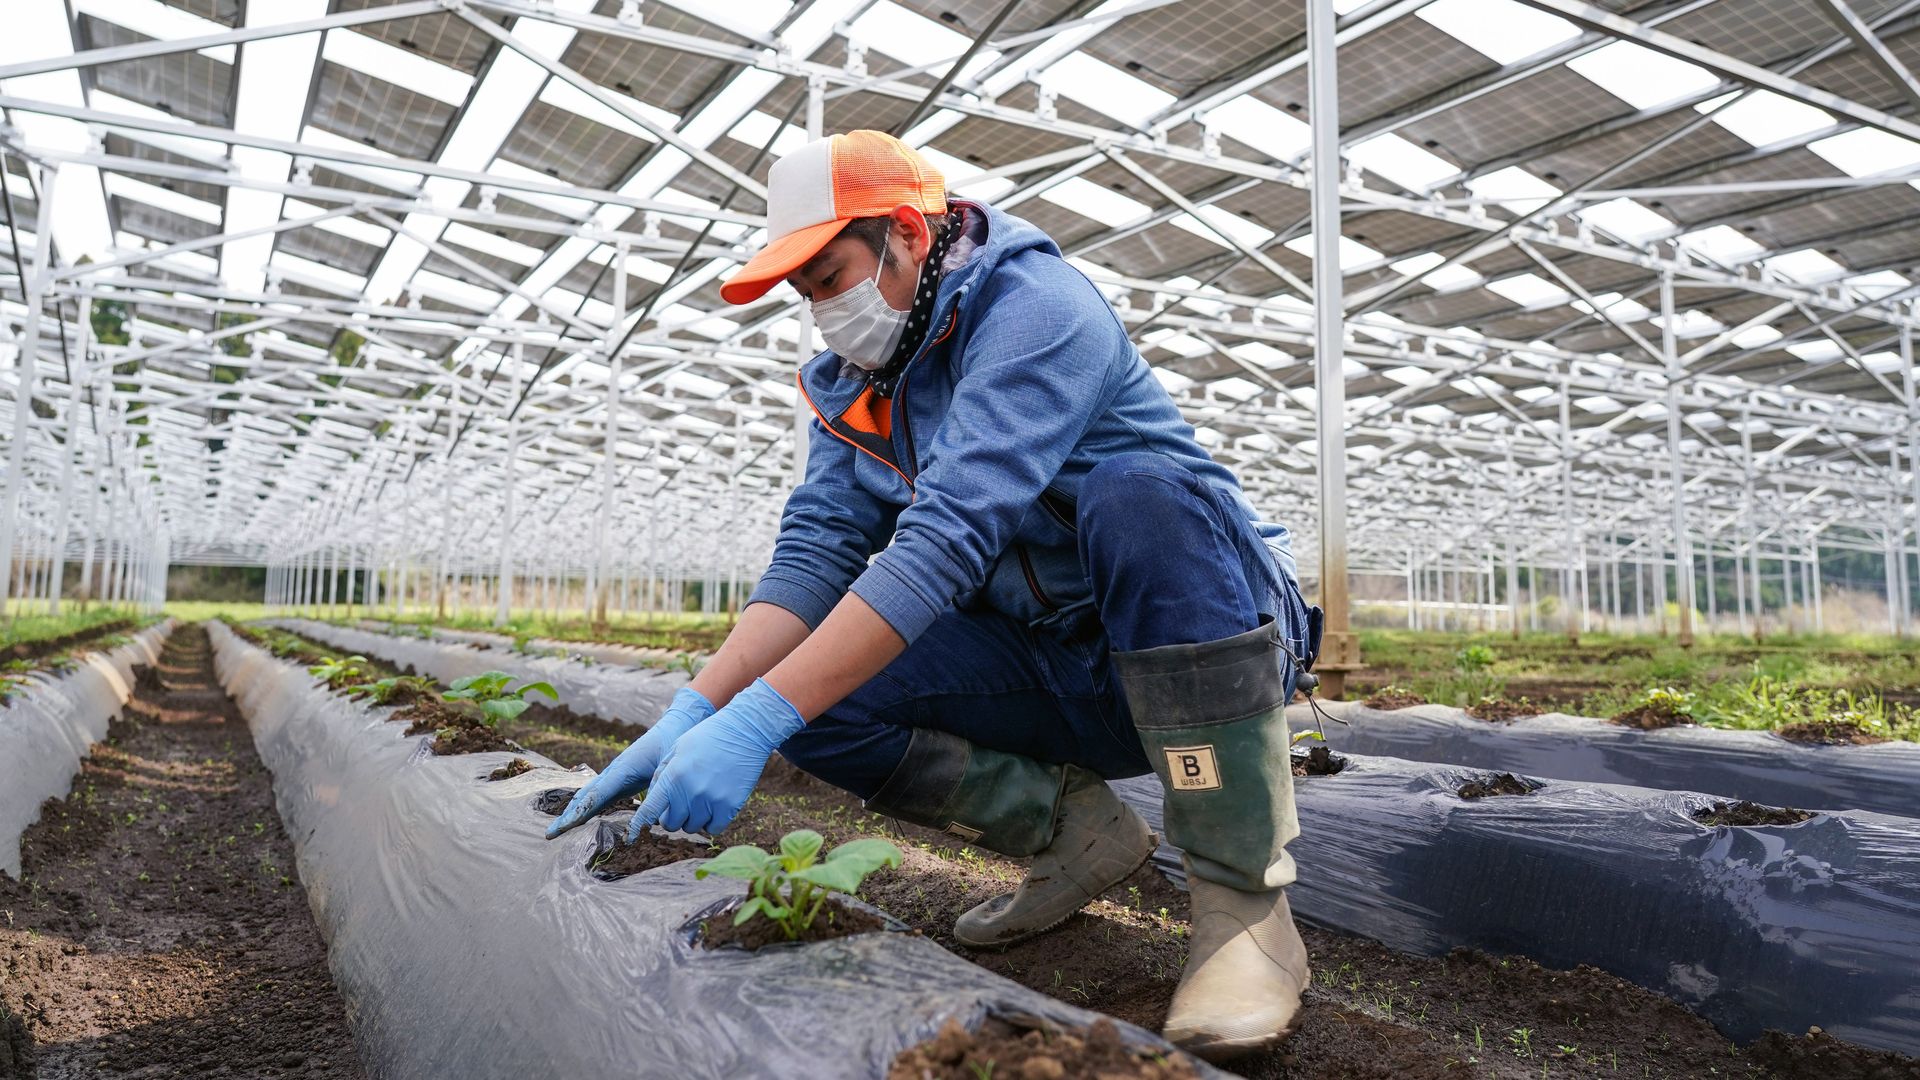 A staff member works on a potato field under solar panels